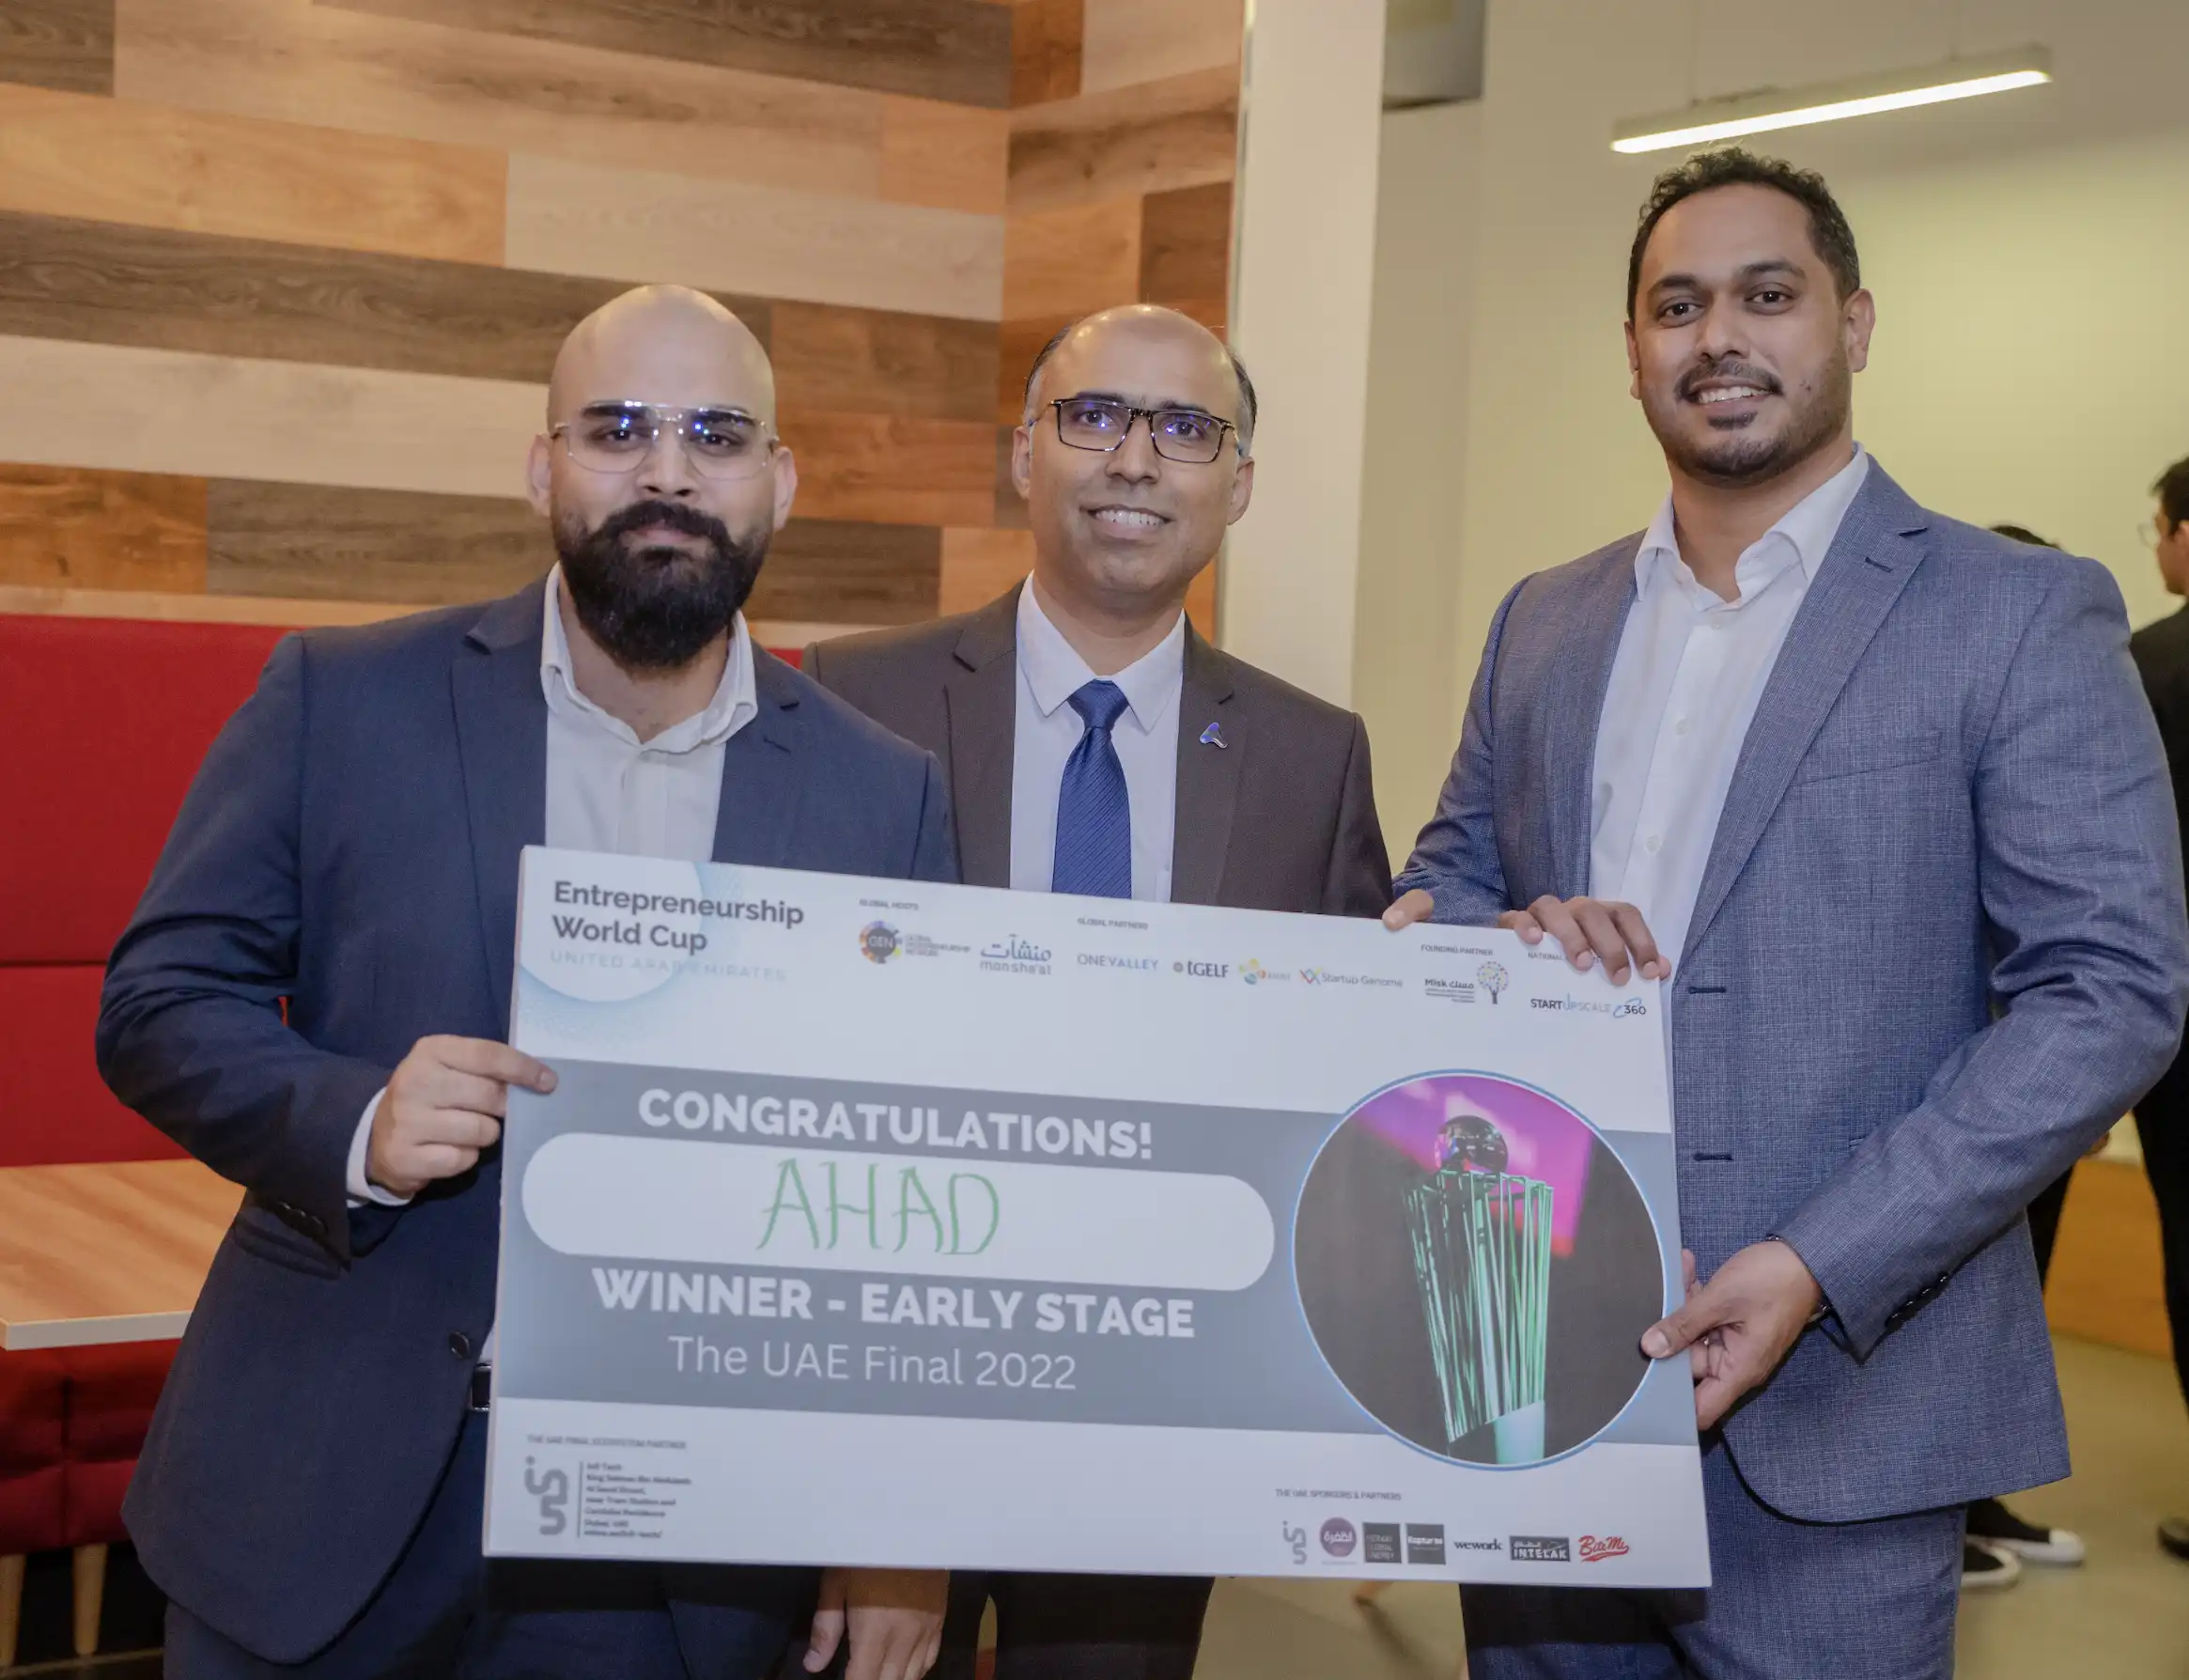 AHAD wins the Entrepreneurship World Cup 2022 UAE finals